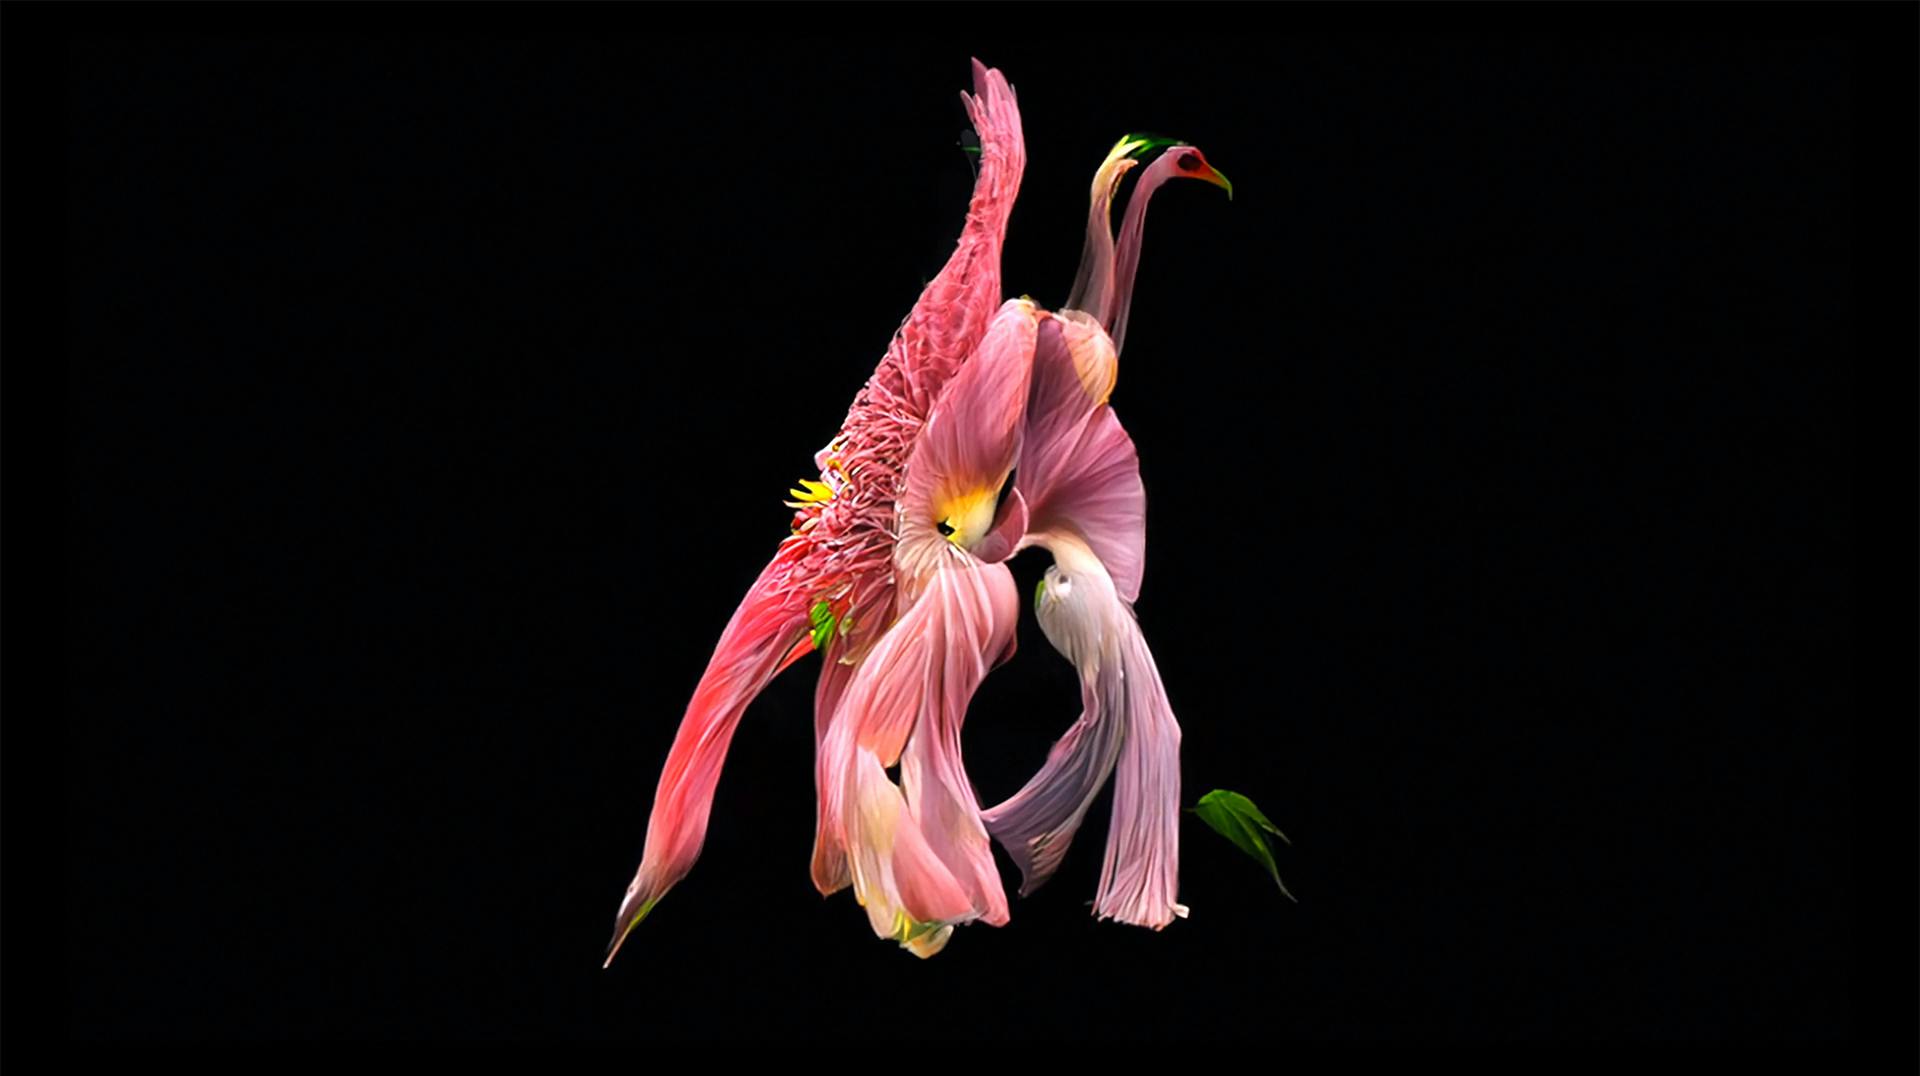 Metamorphic dancers take flight in HAAi's music video